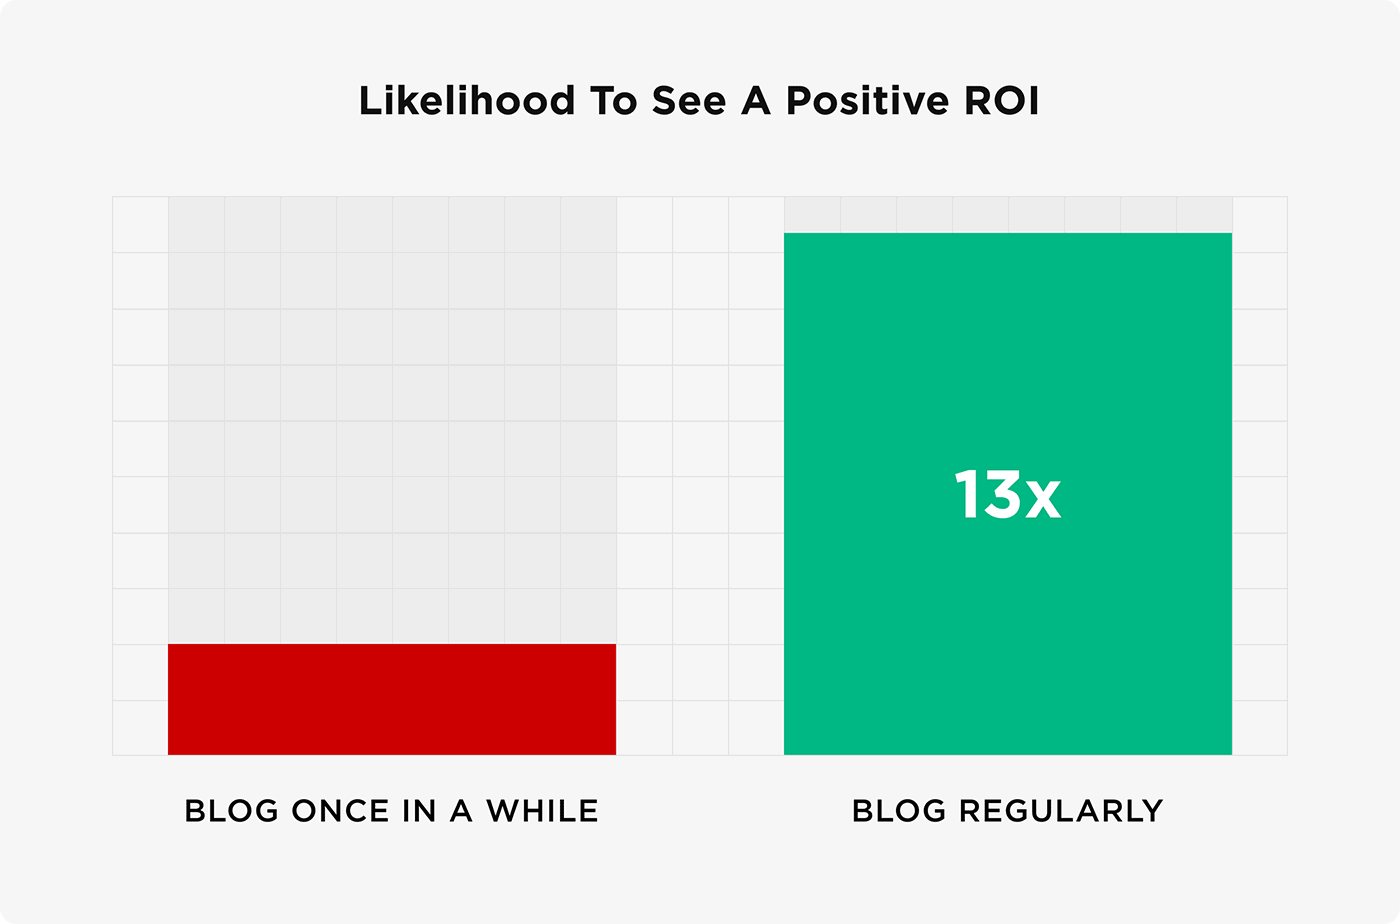 Likelihood to see a positive ROI